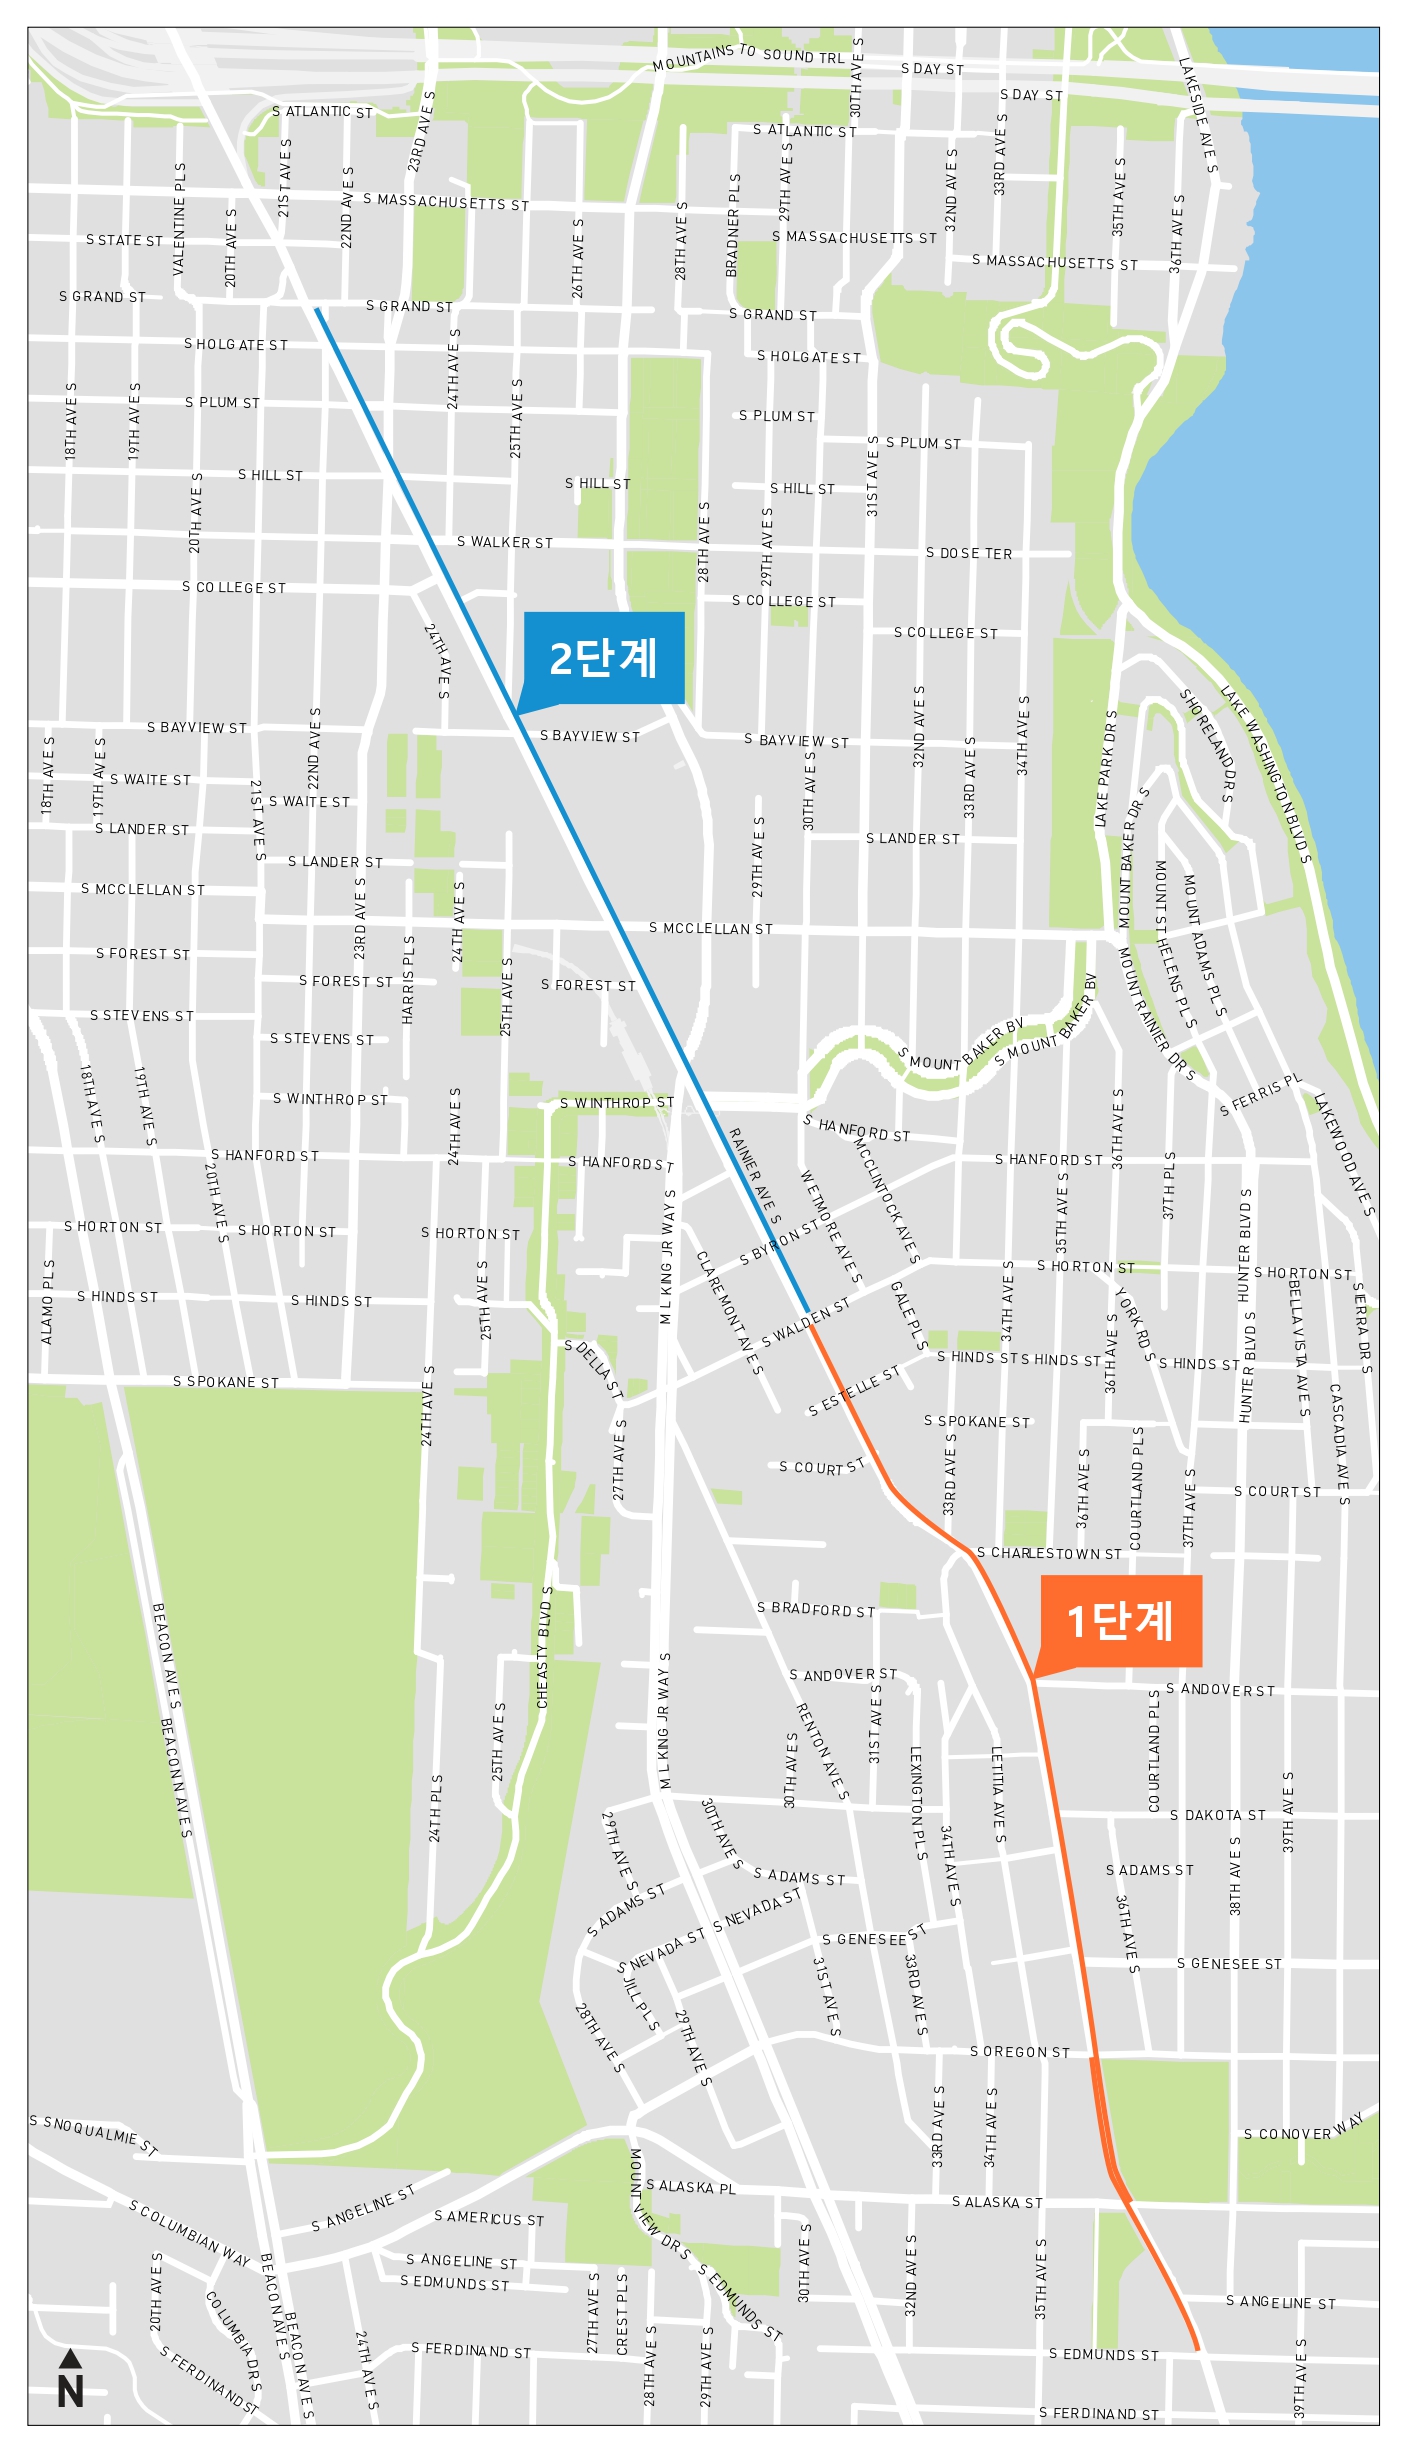 Rainier Ave S를 따라 올라가는 1단계와 2단계를 보여주는 Rainier Ave S 버스 전용 차선의 프로젝트 구역 지도.